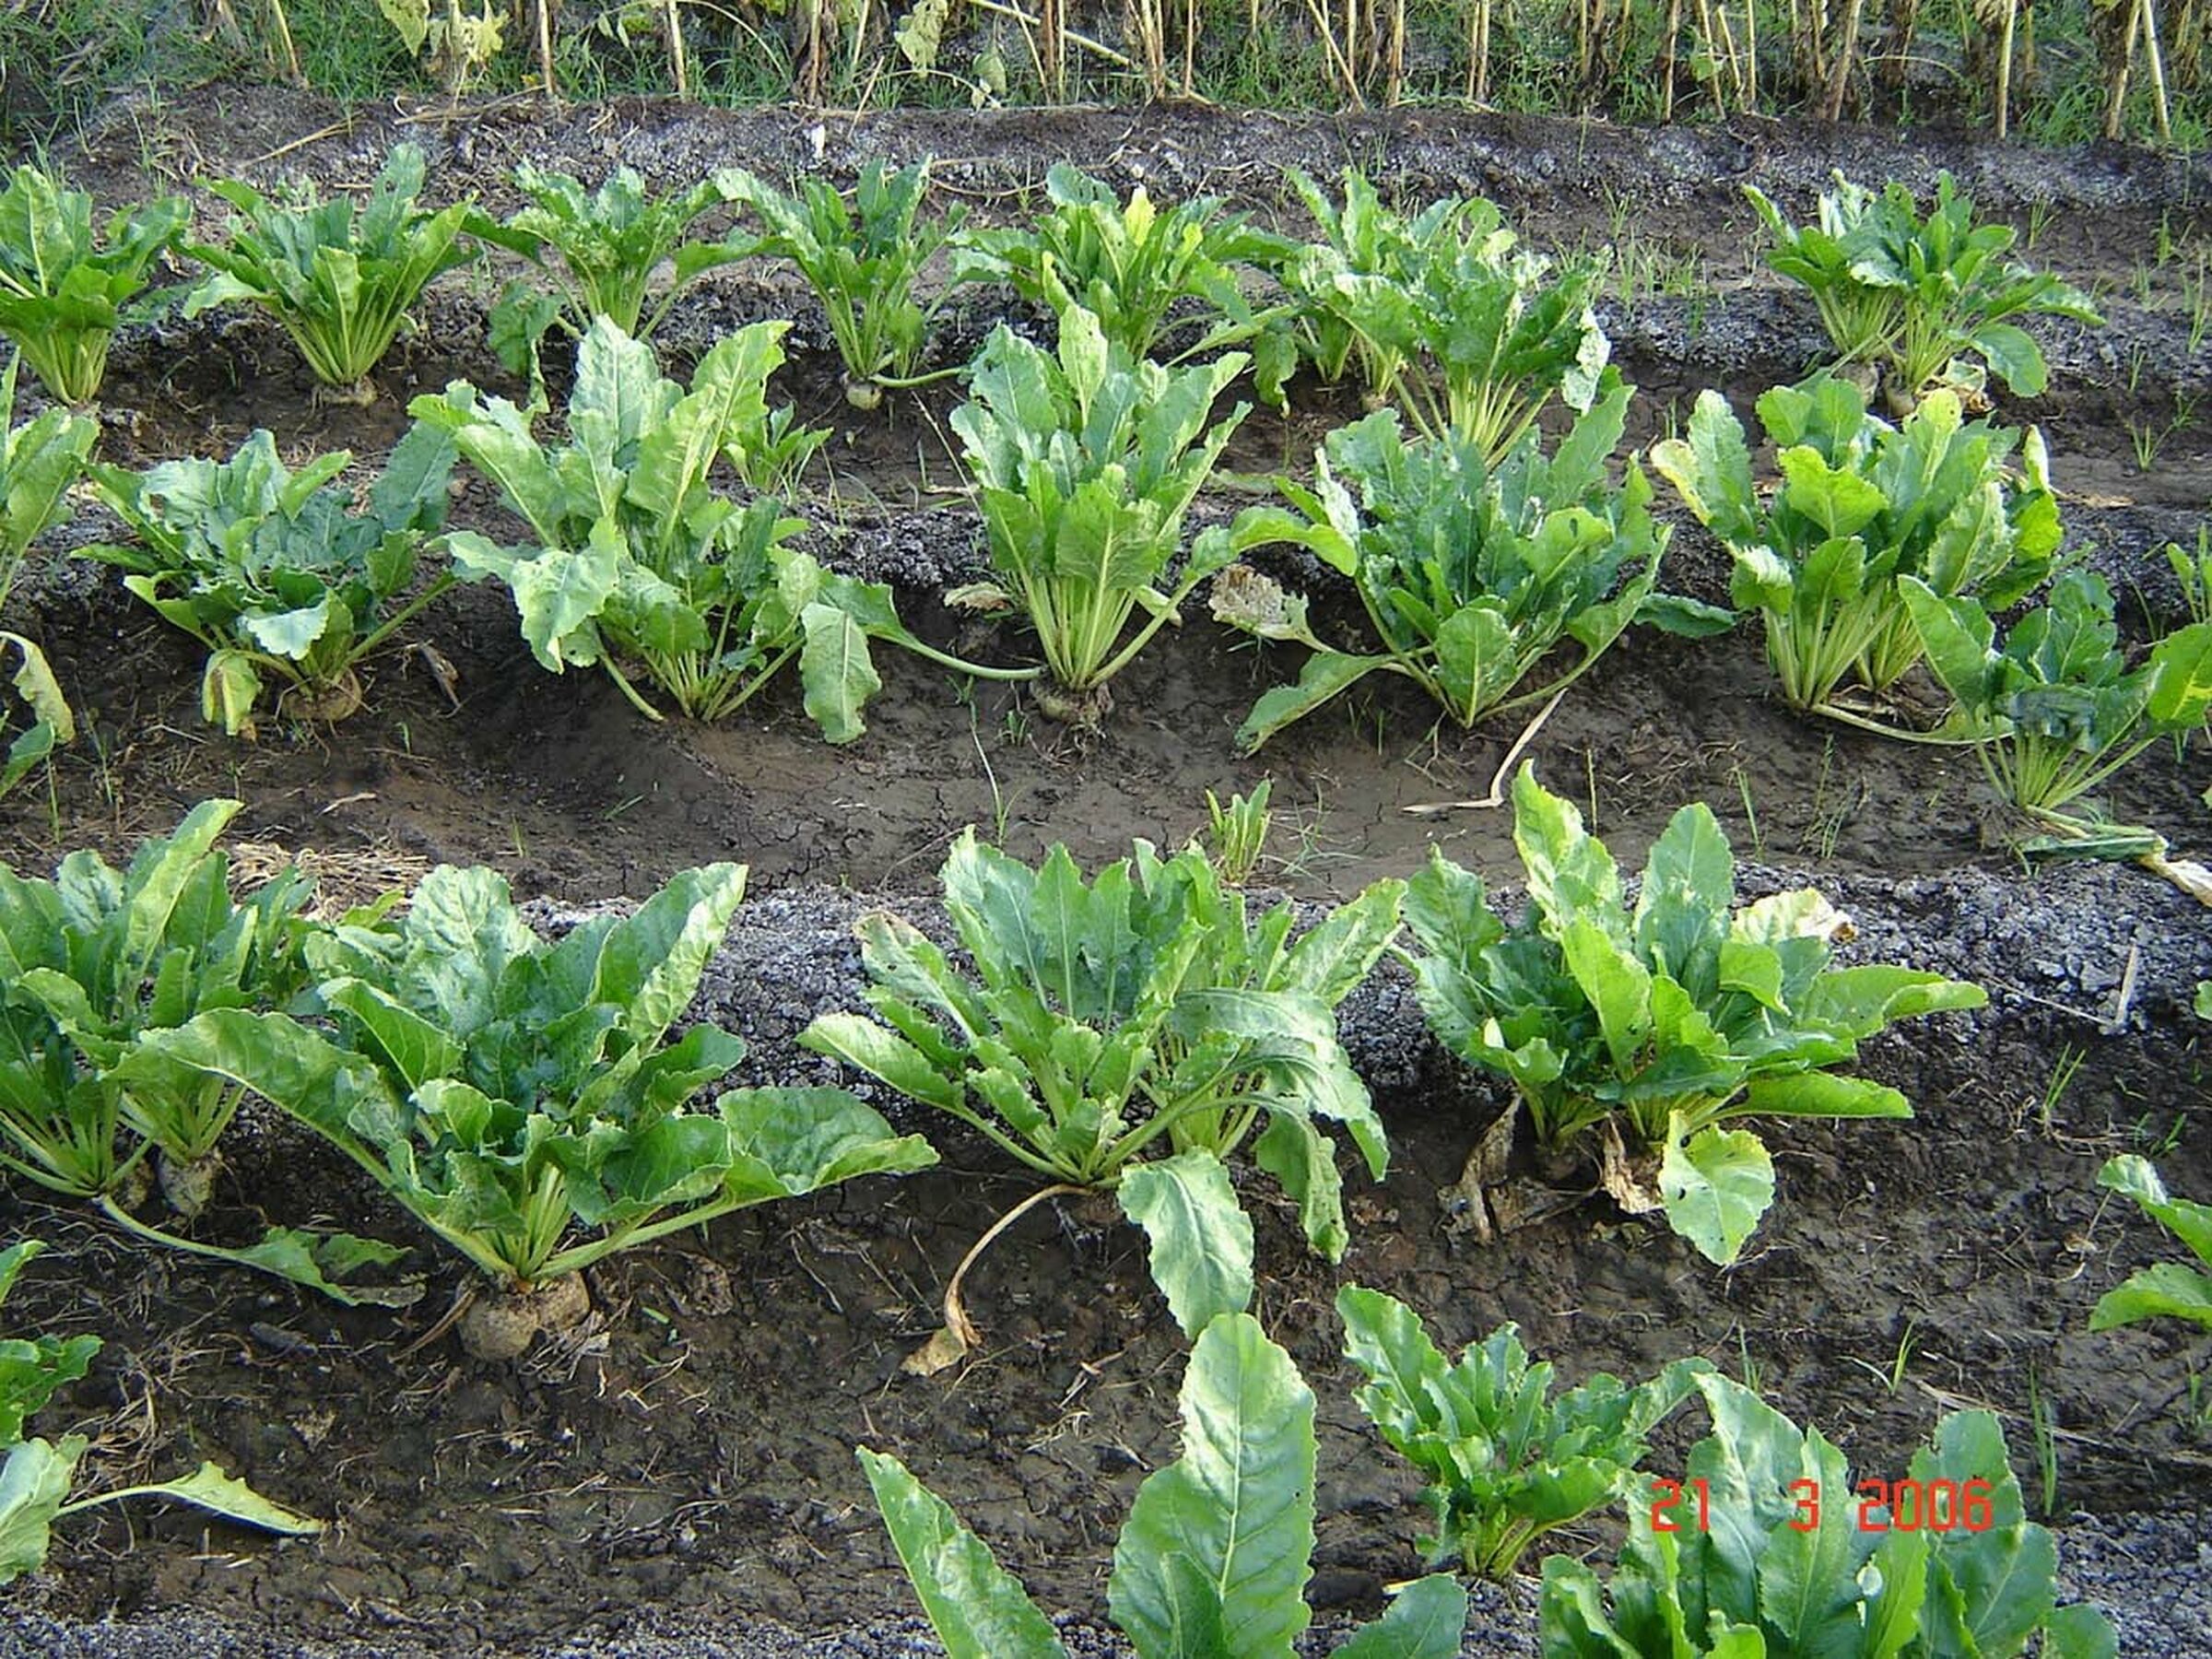 Sesvanderhave nederland news 2019 water productivity sugar beet